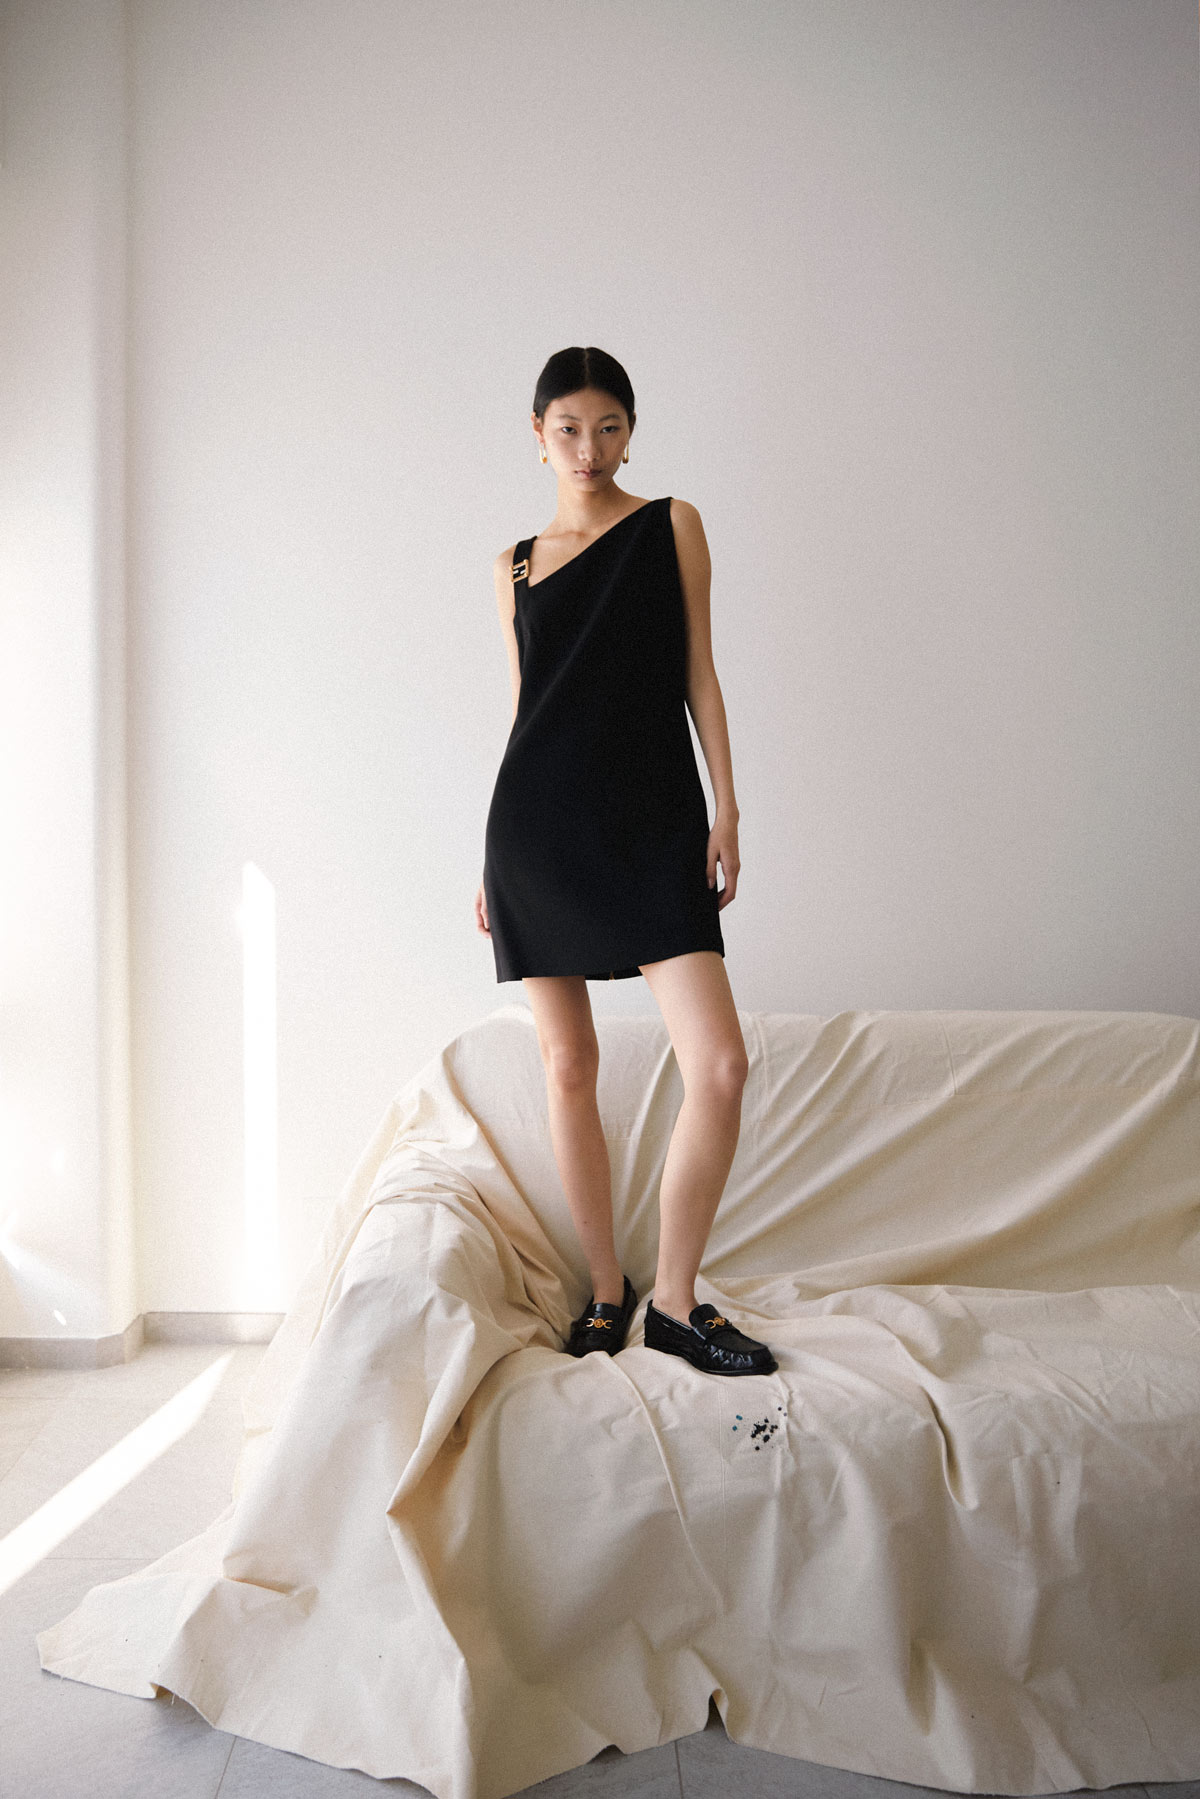 Ruyu Chen – Fabbrica Models